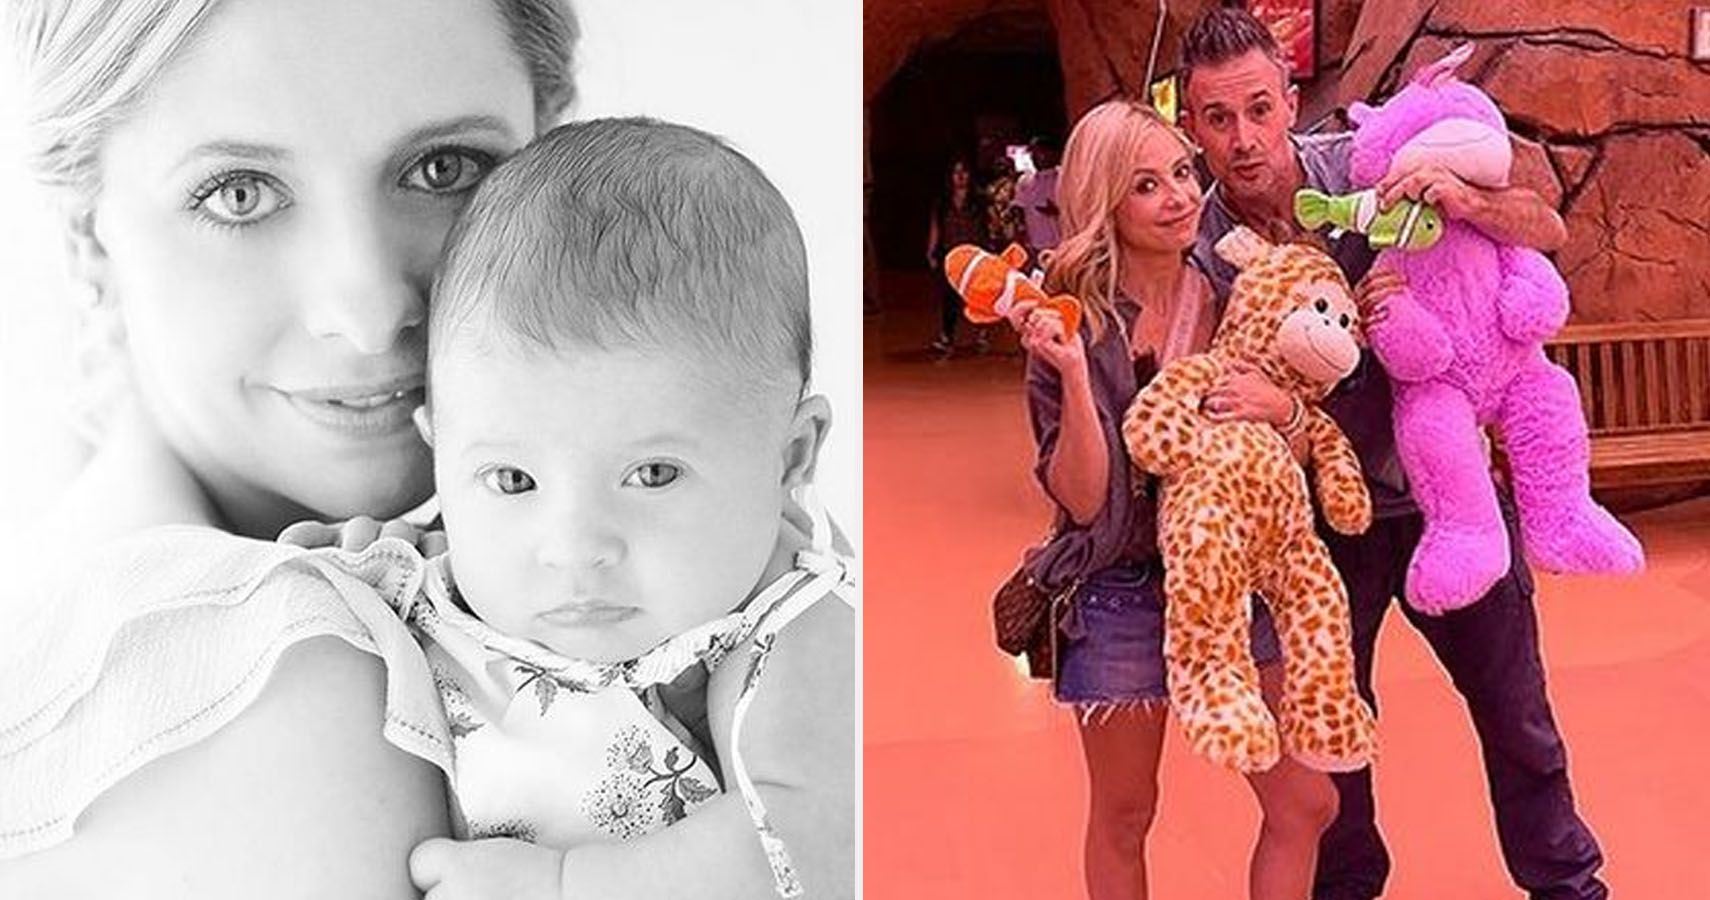 Os 10 momentos mais relevantes de paternidade de Sarah Michelle Gellar e Freddie Prinze Jr. nas redes sociais